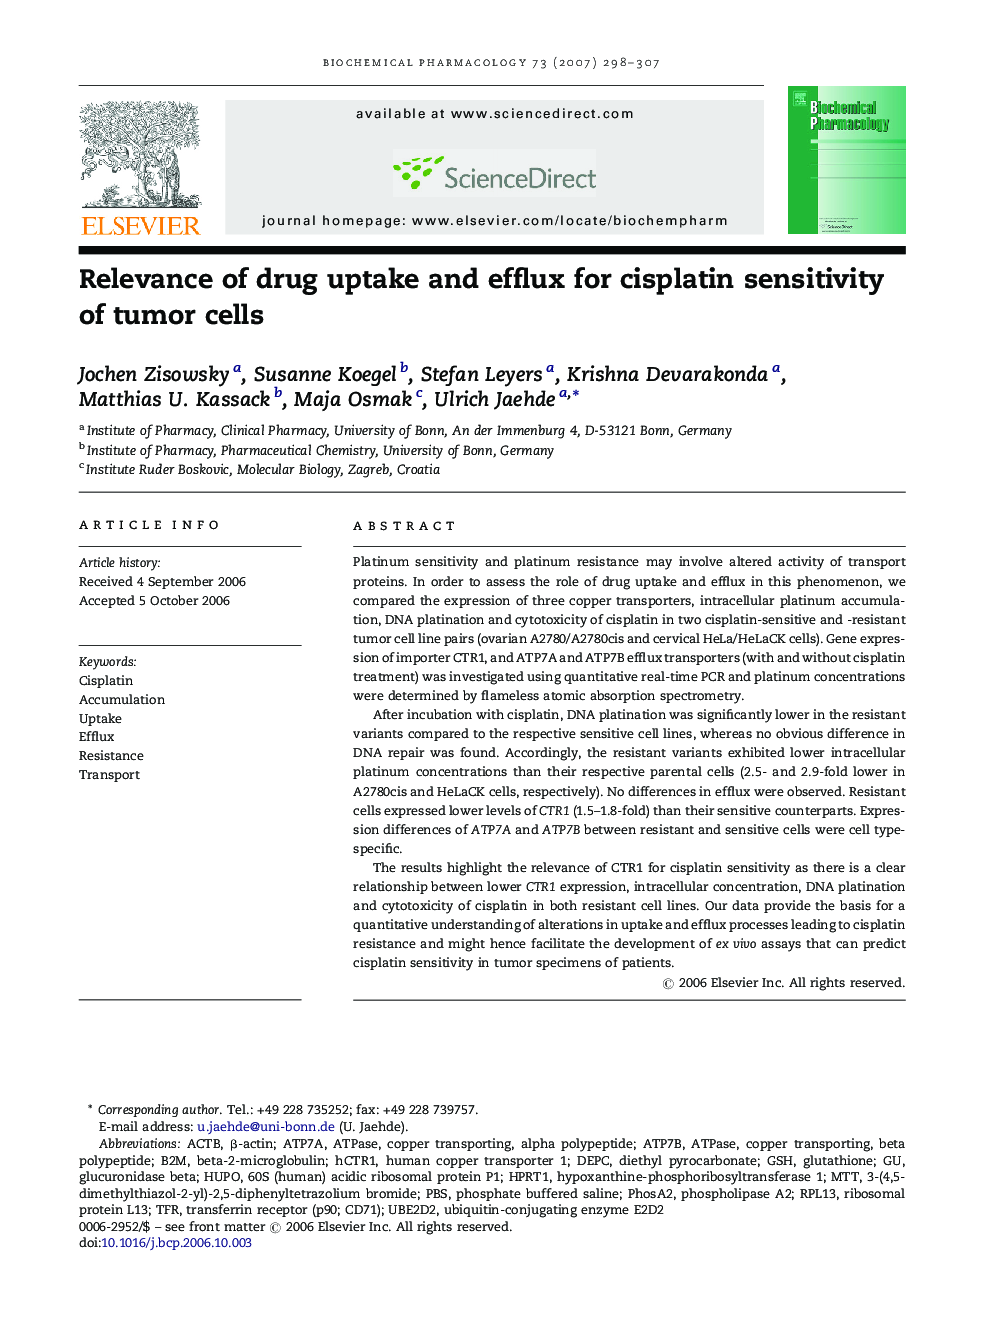 Relevance of drug uptake and efflux for cisplatin sensitivity of tumor cells